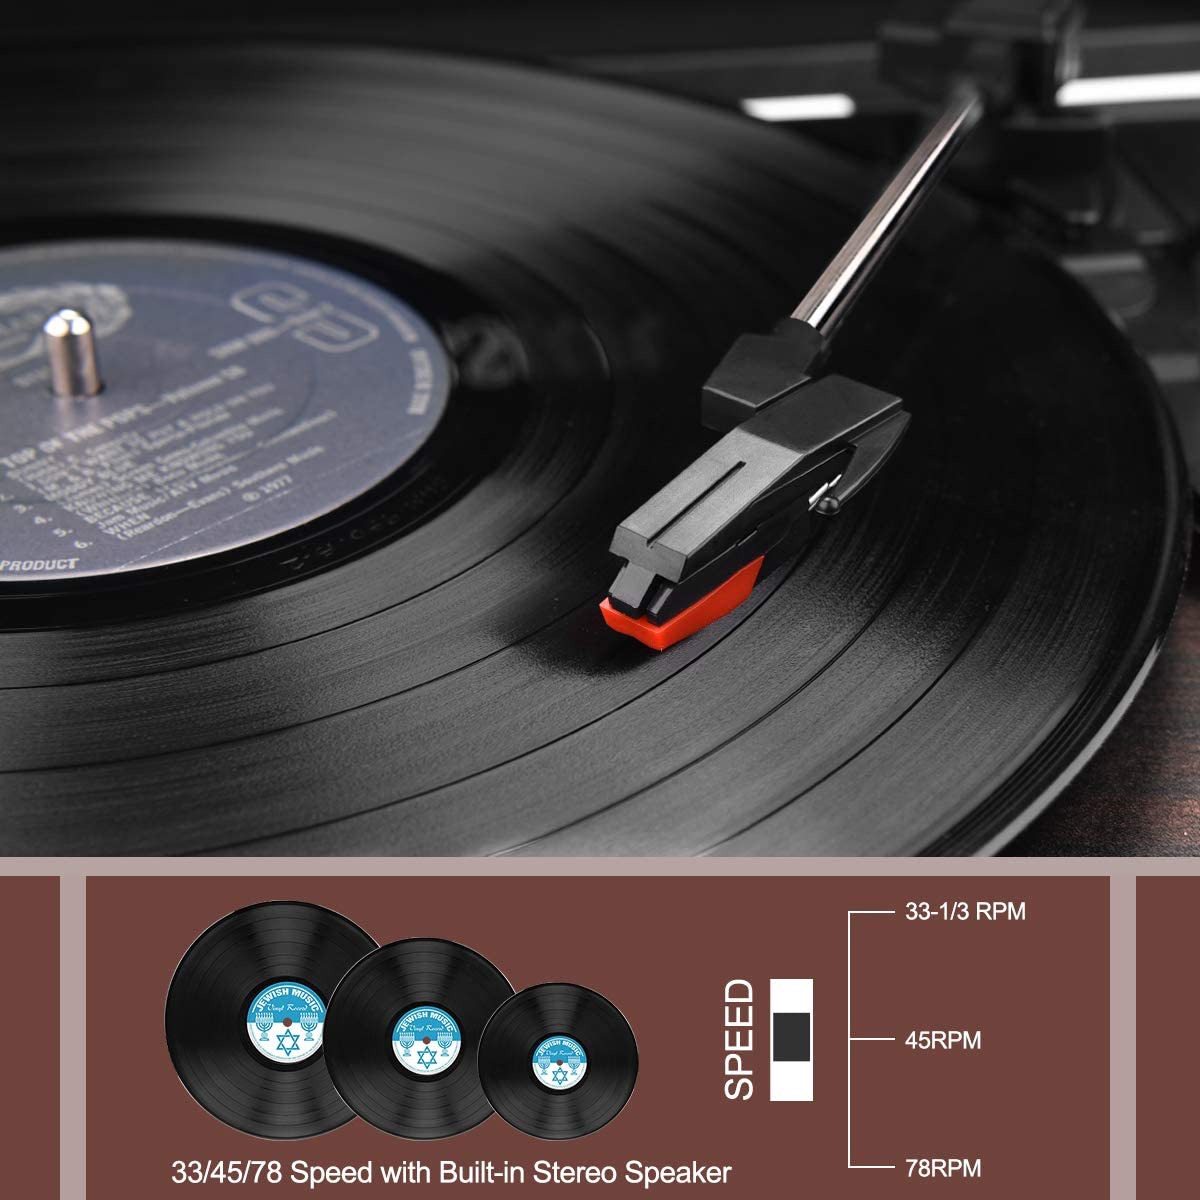 AETKFO Bluetooth Turntable 3-Speed Vinyl Record Player - Brown